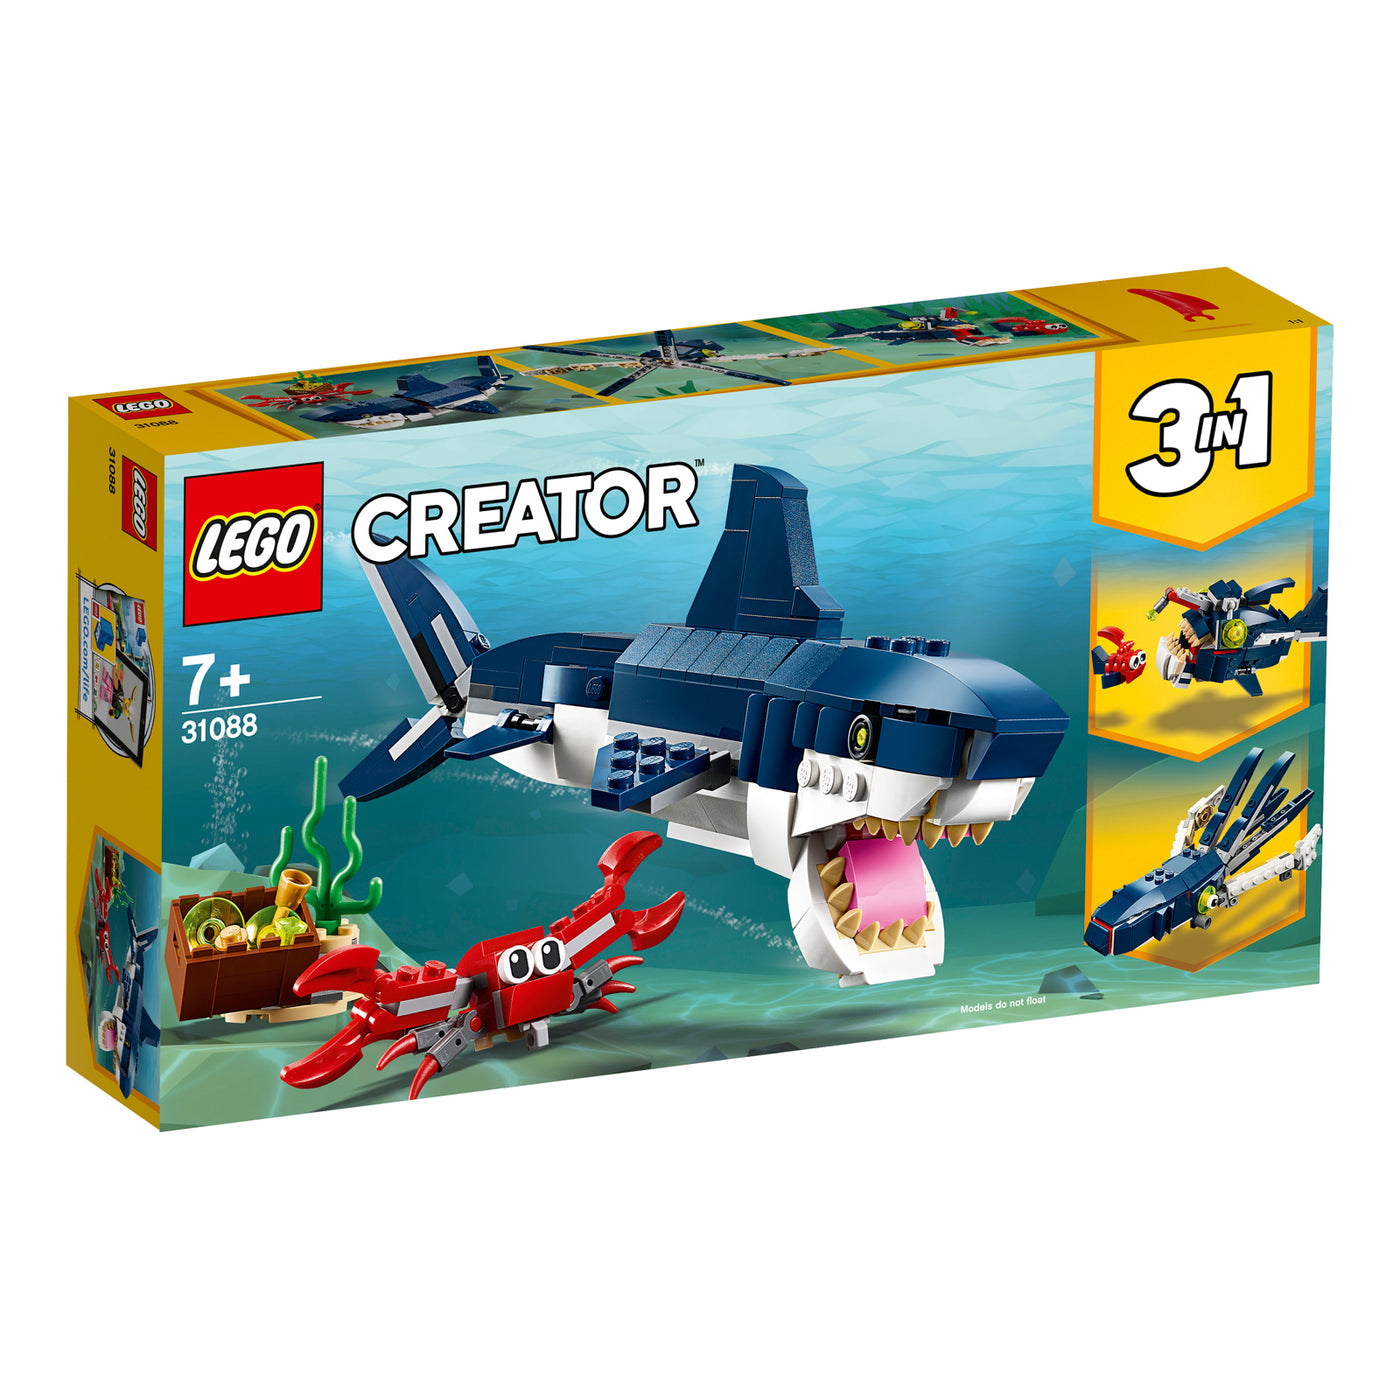 Creator Deep Sea Creatures 31088